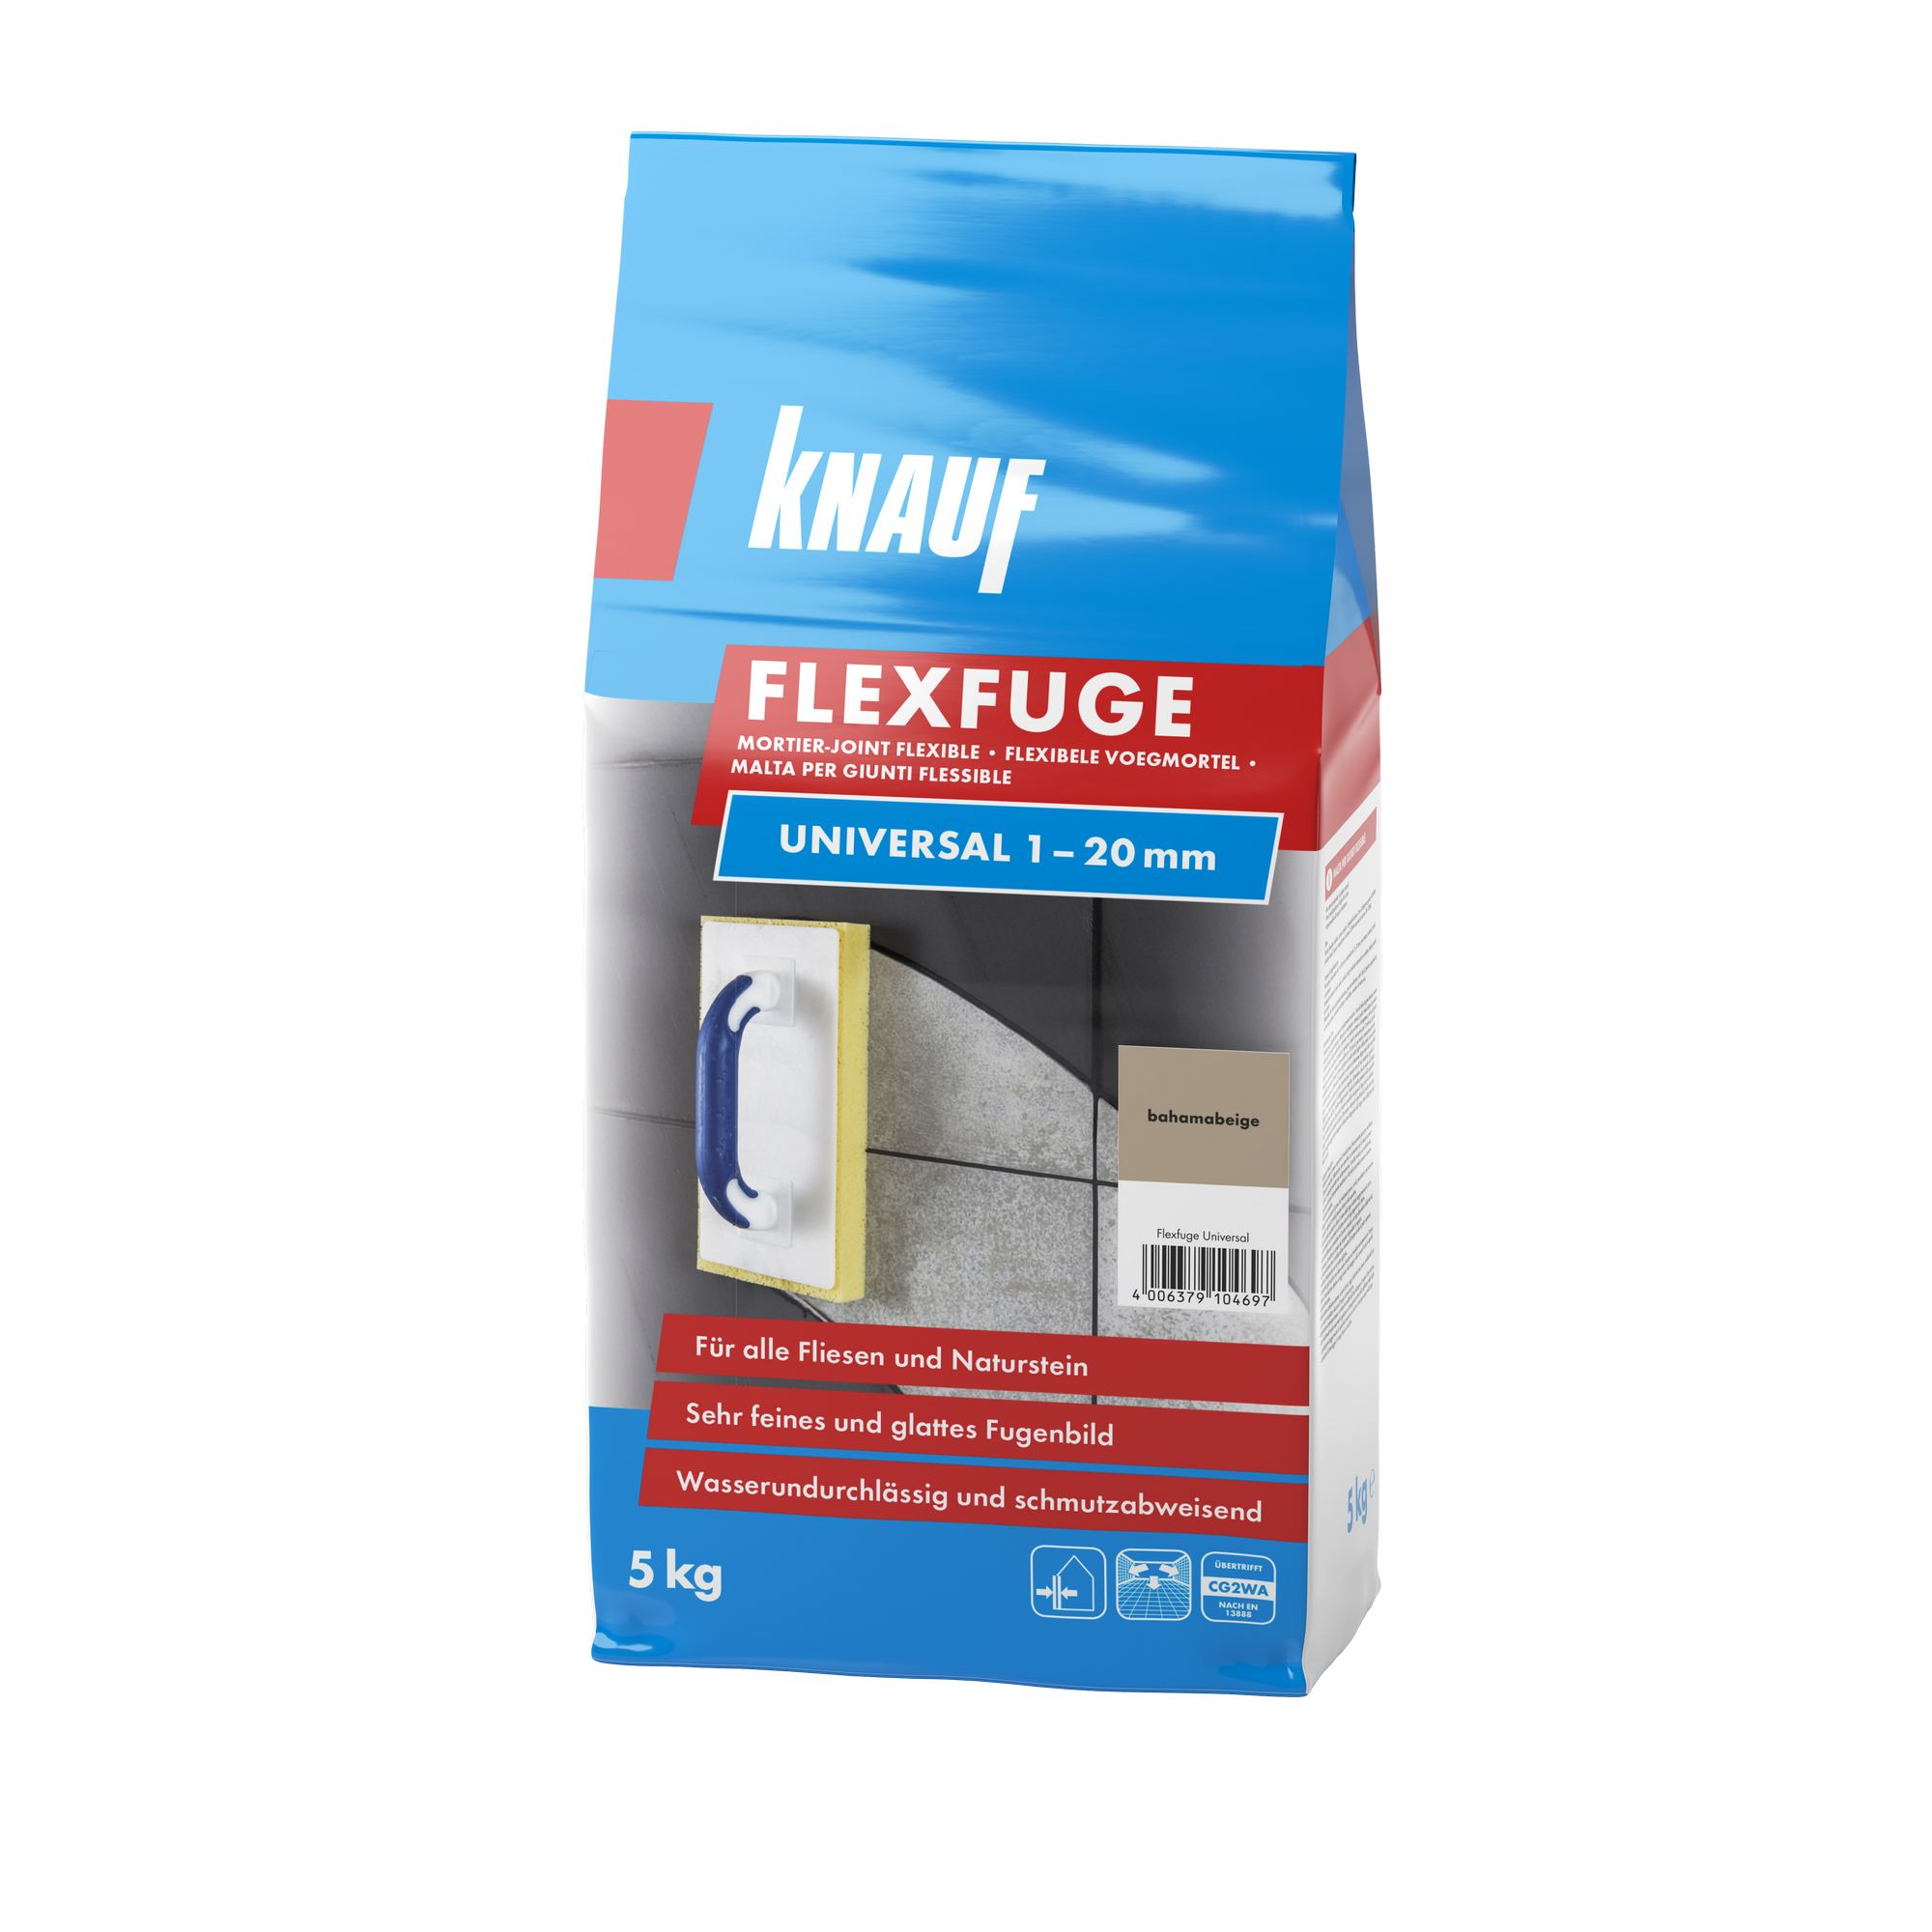 Flexfuge 'Universal' bahamabeige 5 kg + product picture